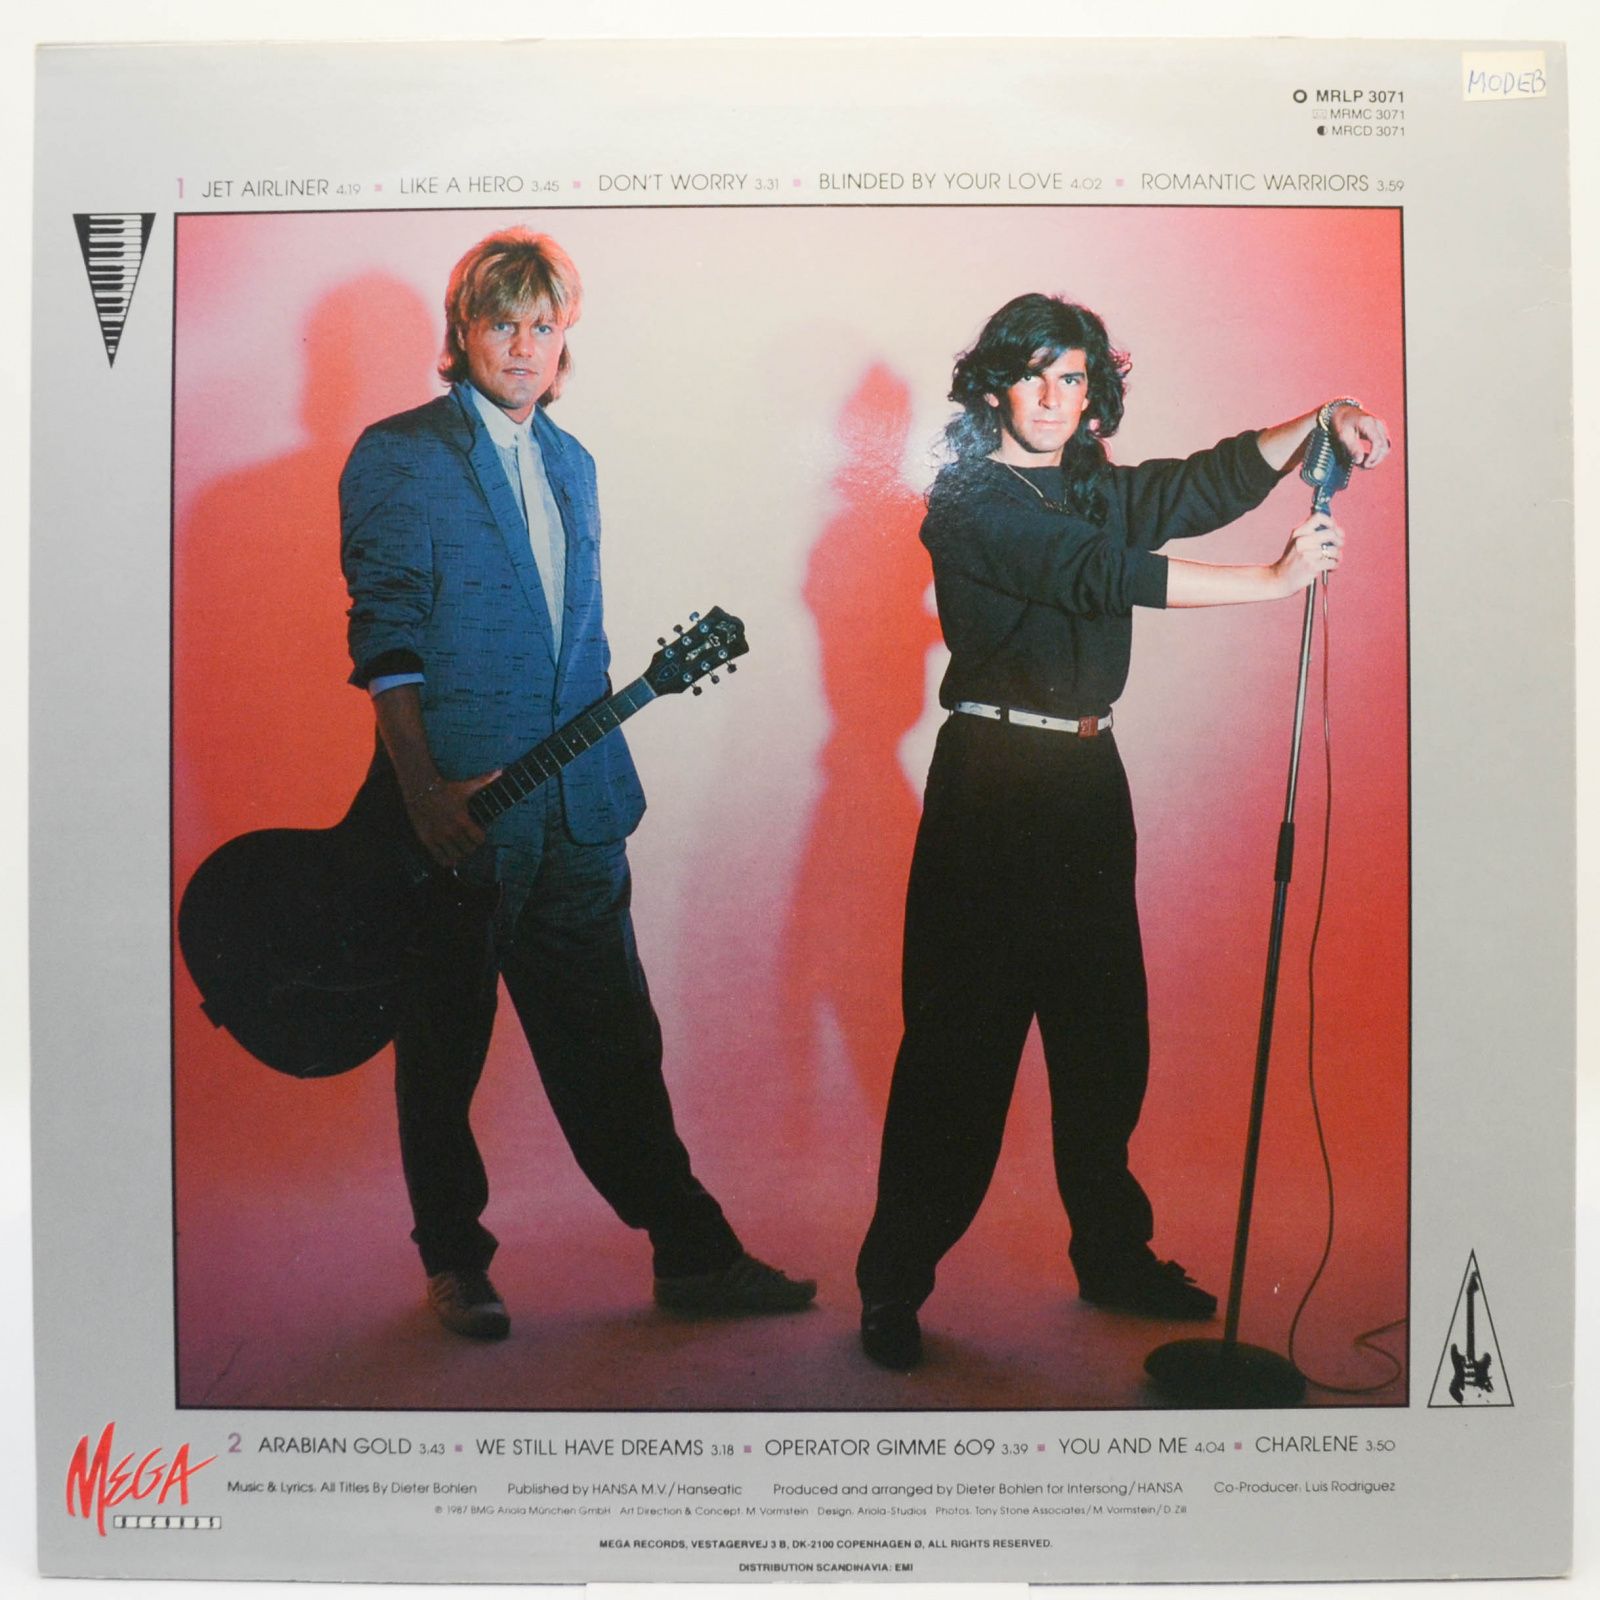 Modern talking romance. Modern talking 1987. Modern talking Romantic Warriors 1987. Modern talking - the 1st album. Modern talking in the Garden of Venus 1987.